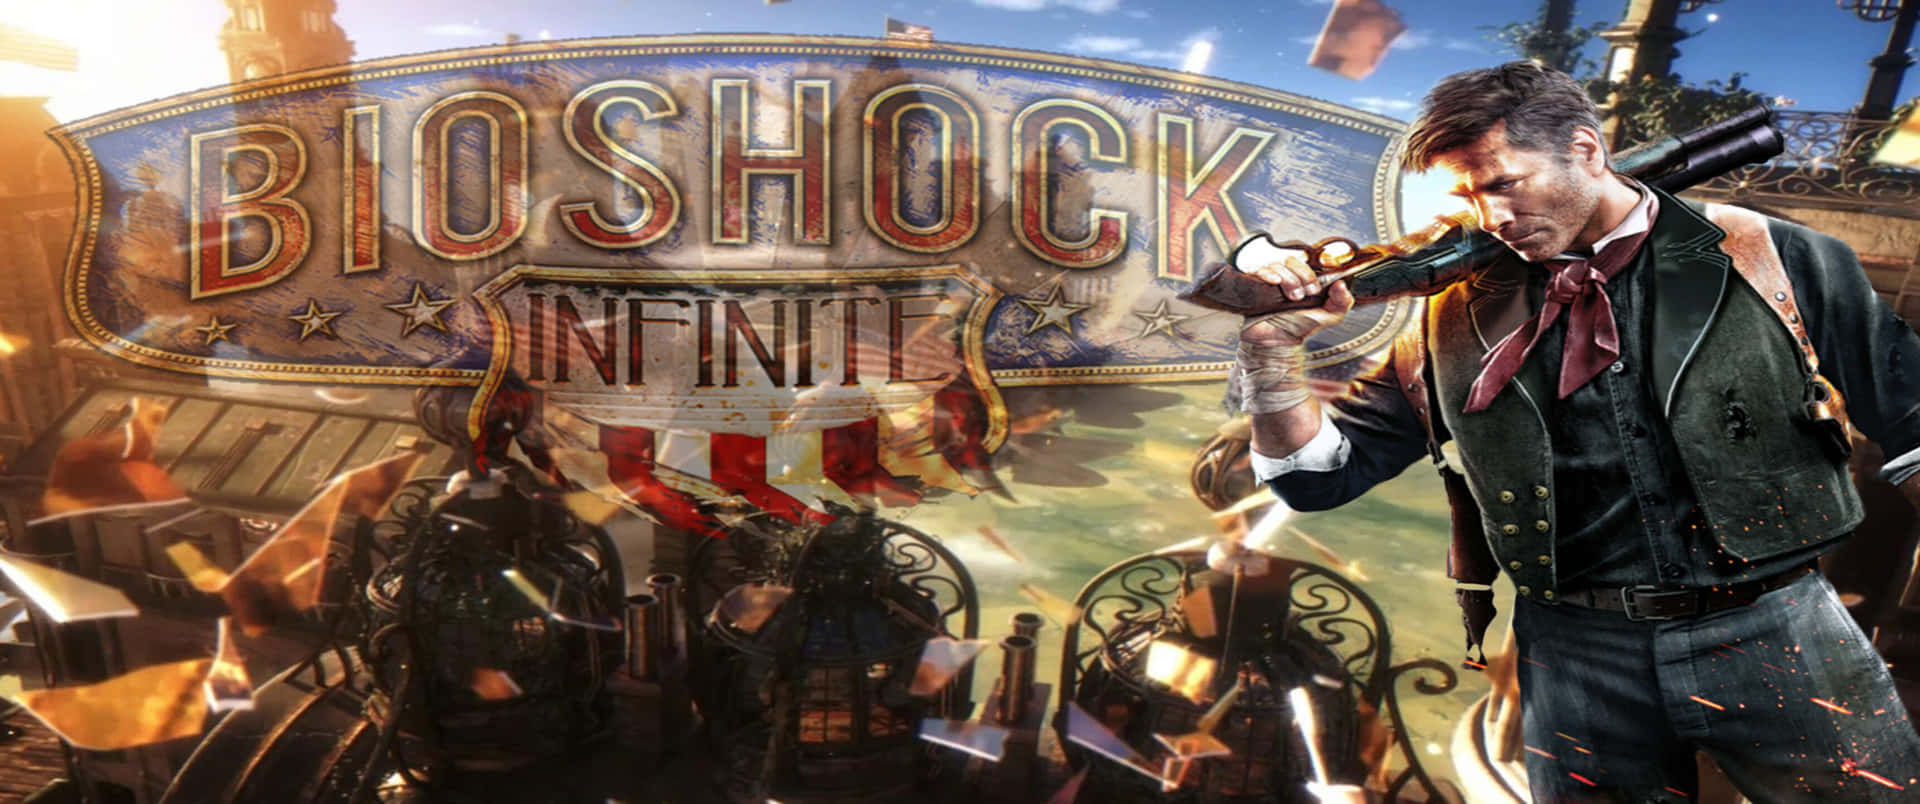 3440x1440p Bioshock Infinite Background Wallpaper